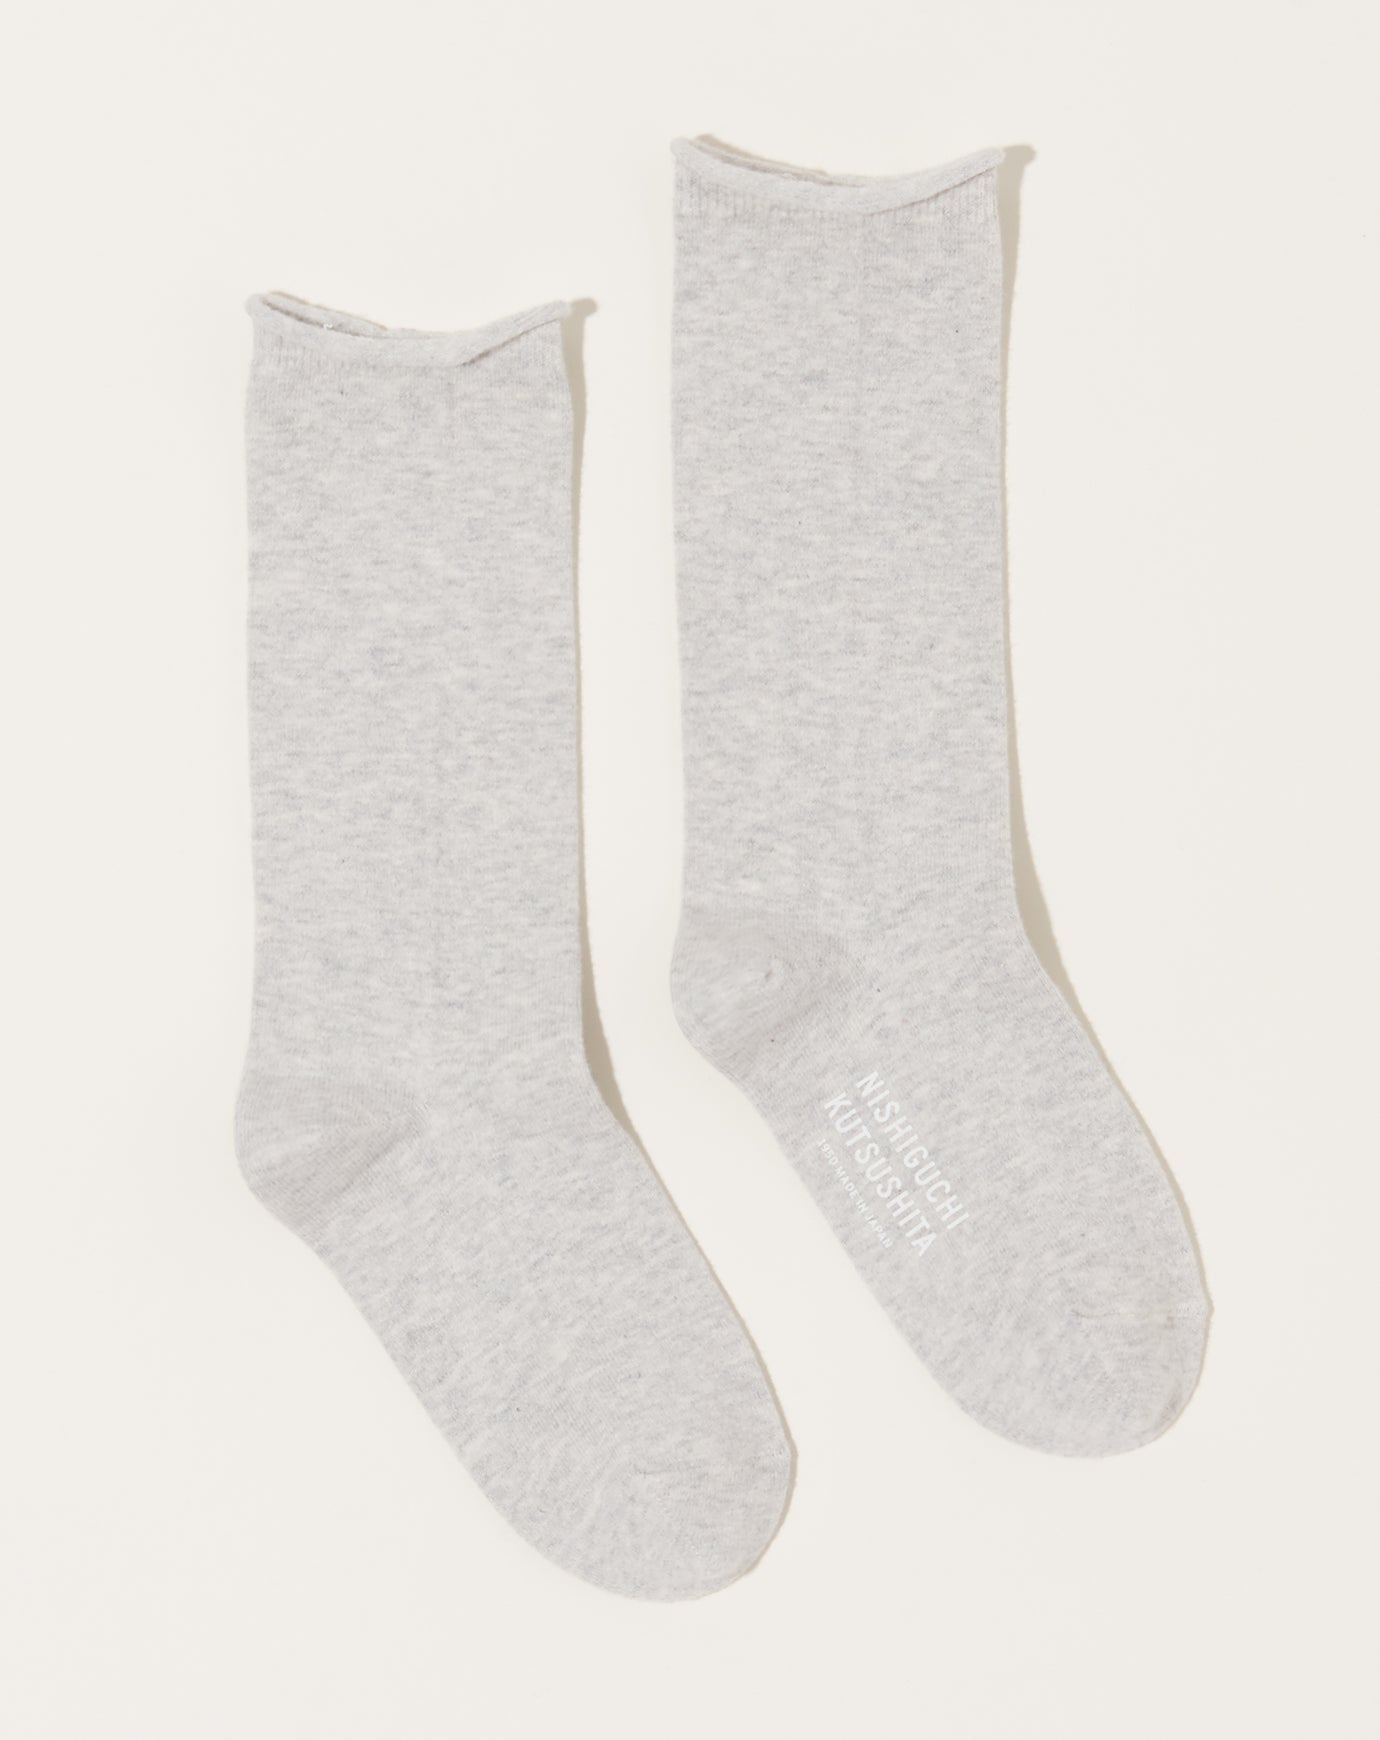 Nishiguchi Kutsushita Cashmere Cotton Socks in Light Grey